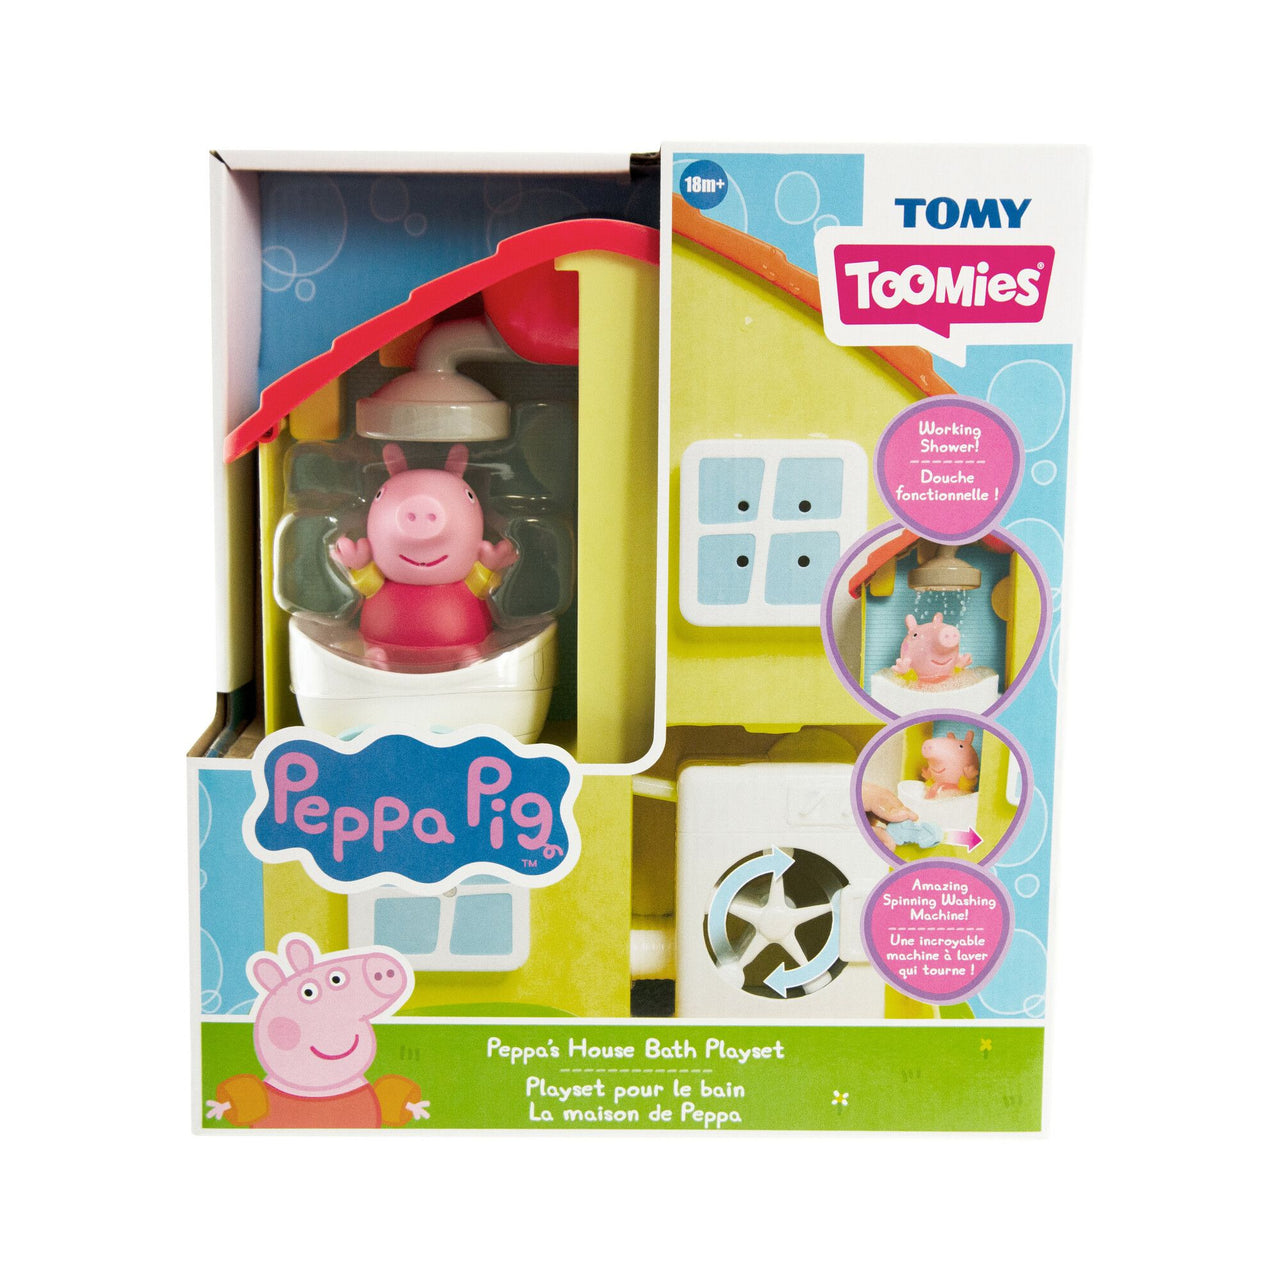 Peppa Pig - Peppa's House Bath Playset